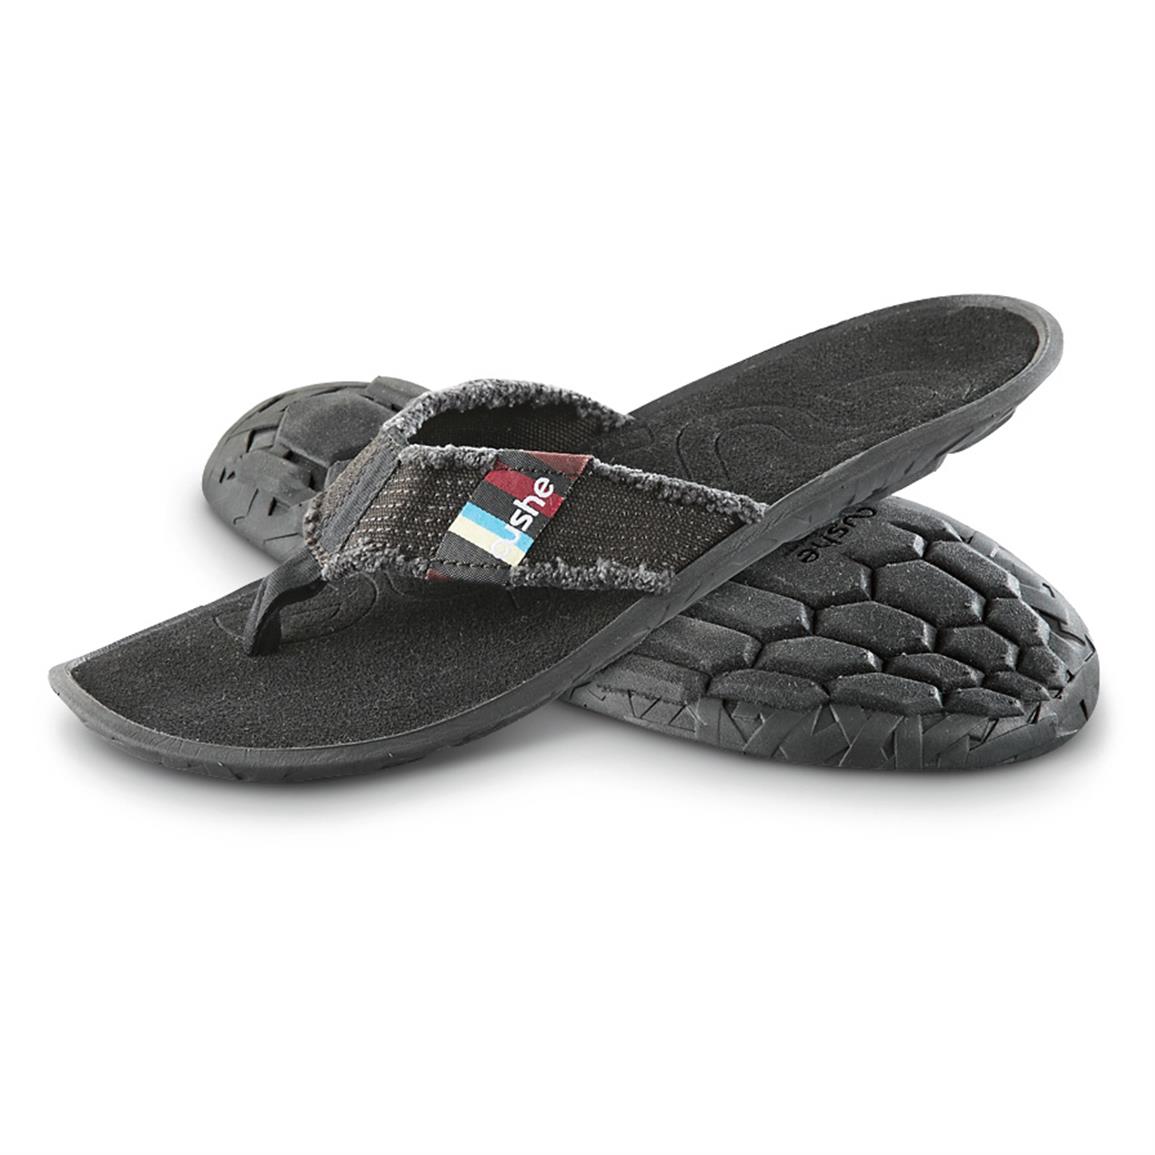 Cushe Flipper Sandals - 622138, Sandals & Flip Flops at Sportsman's Guide